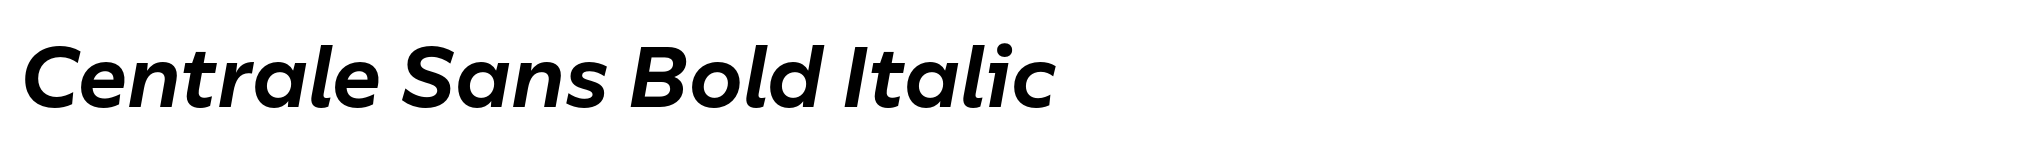 Centrale Sans Bold Italic image